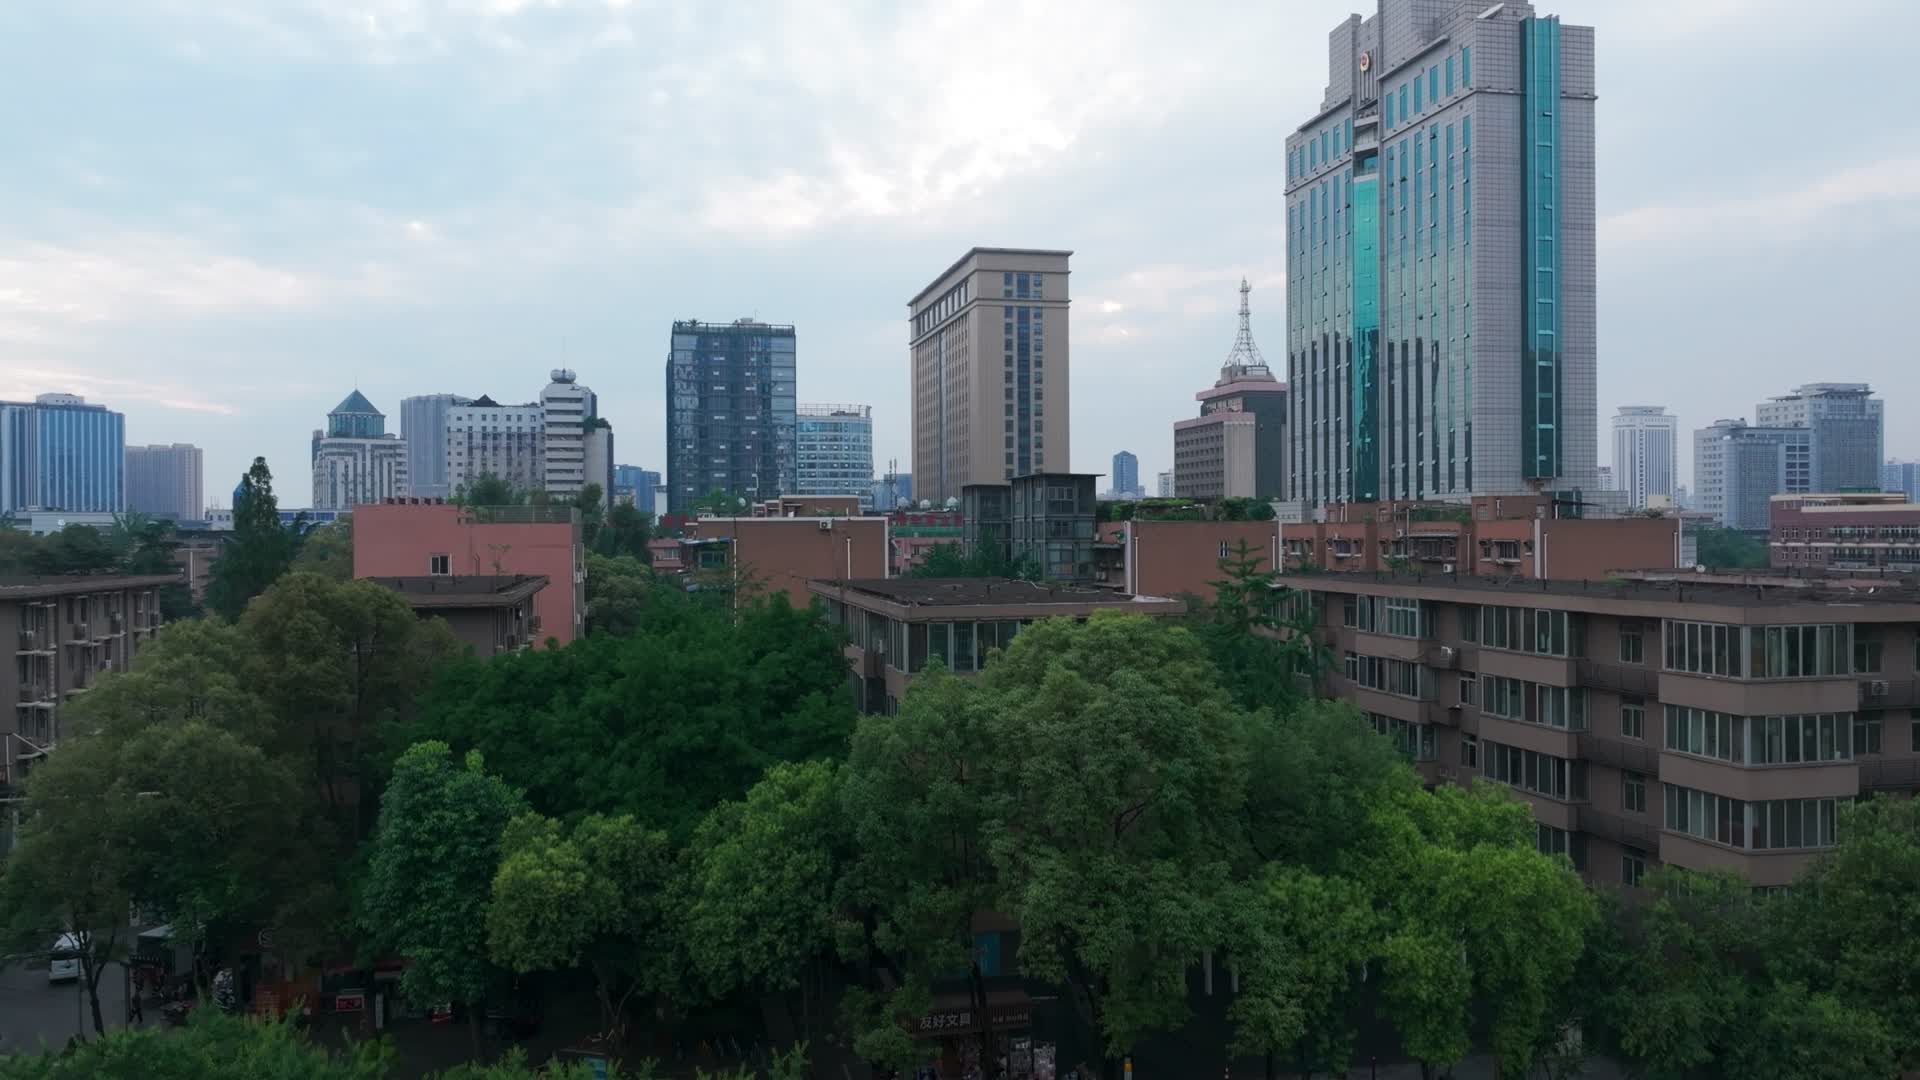 4K延时航拍四川成都城市风光视频的预览图